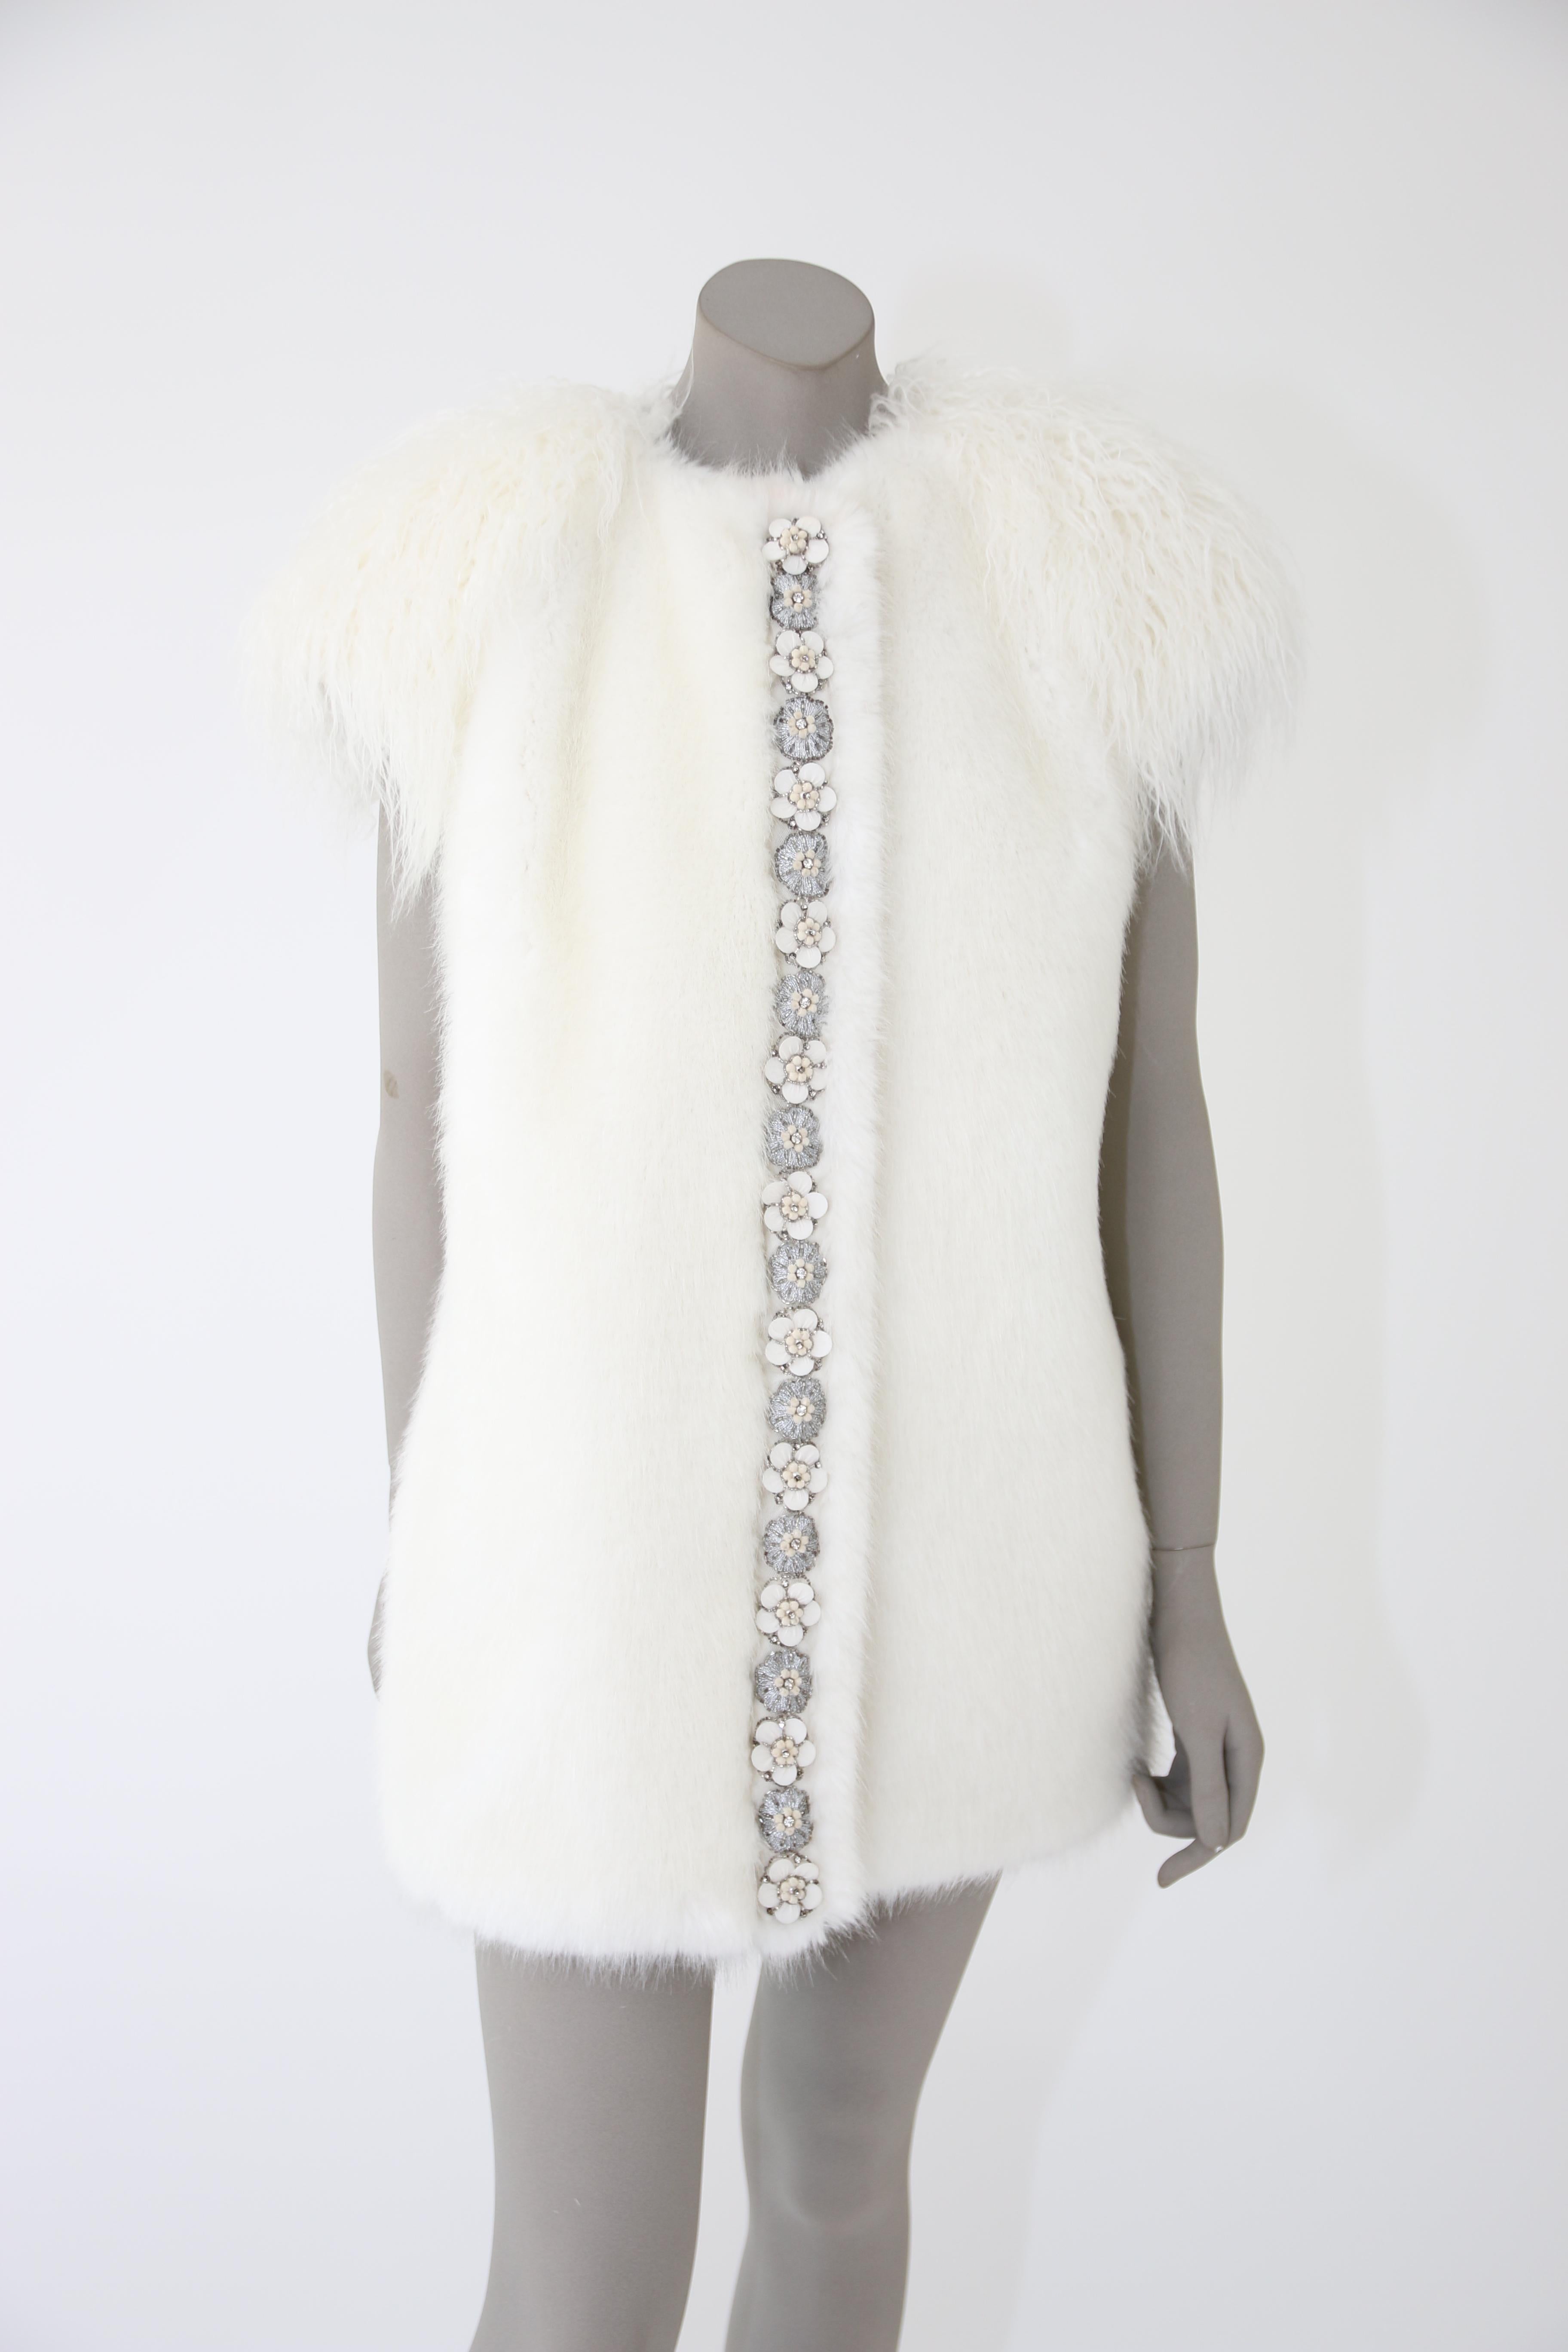 Gray Pelush White Faux Fur Mink Vest with Details - One Size S/M For Sale